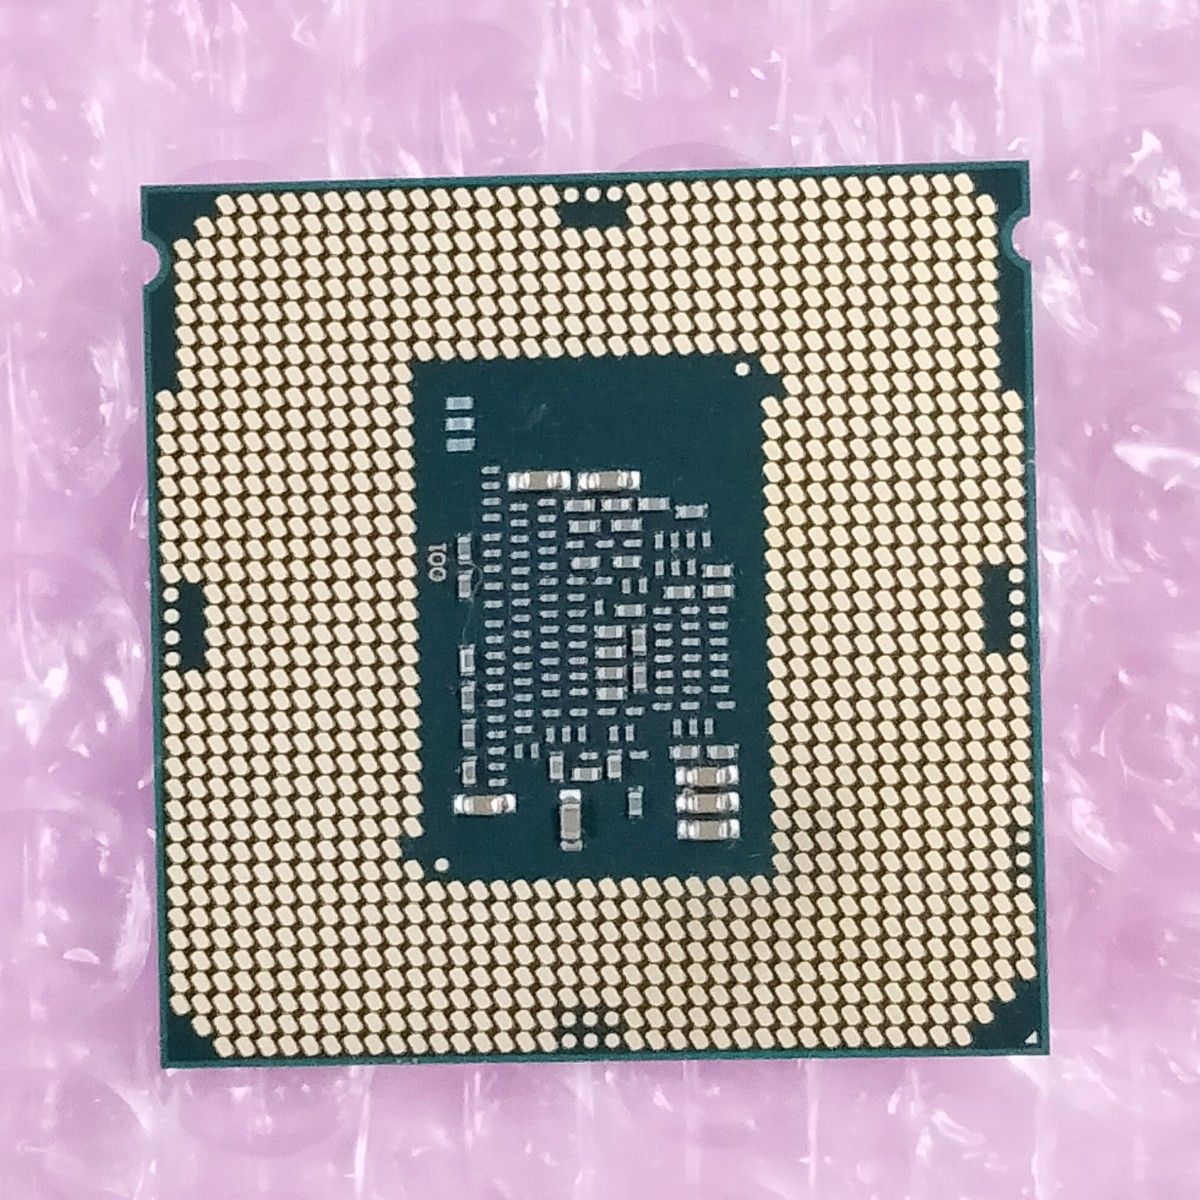 【動作確認済み】Celeron G3900 2.80GHz / 第6世代 Intel CPU / LGA1151